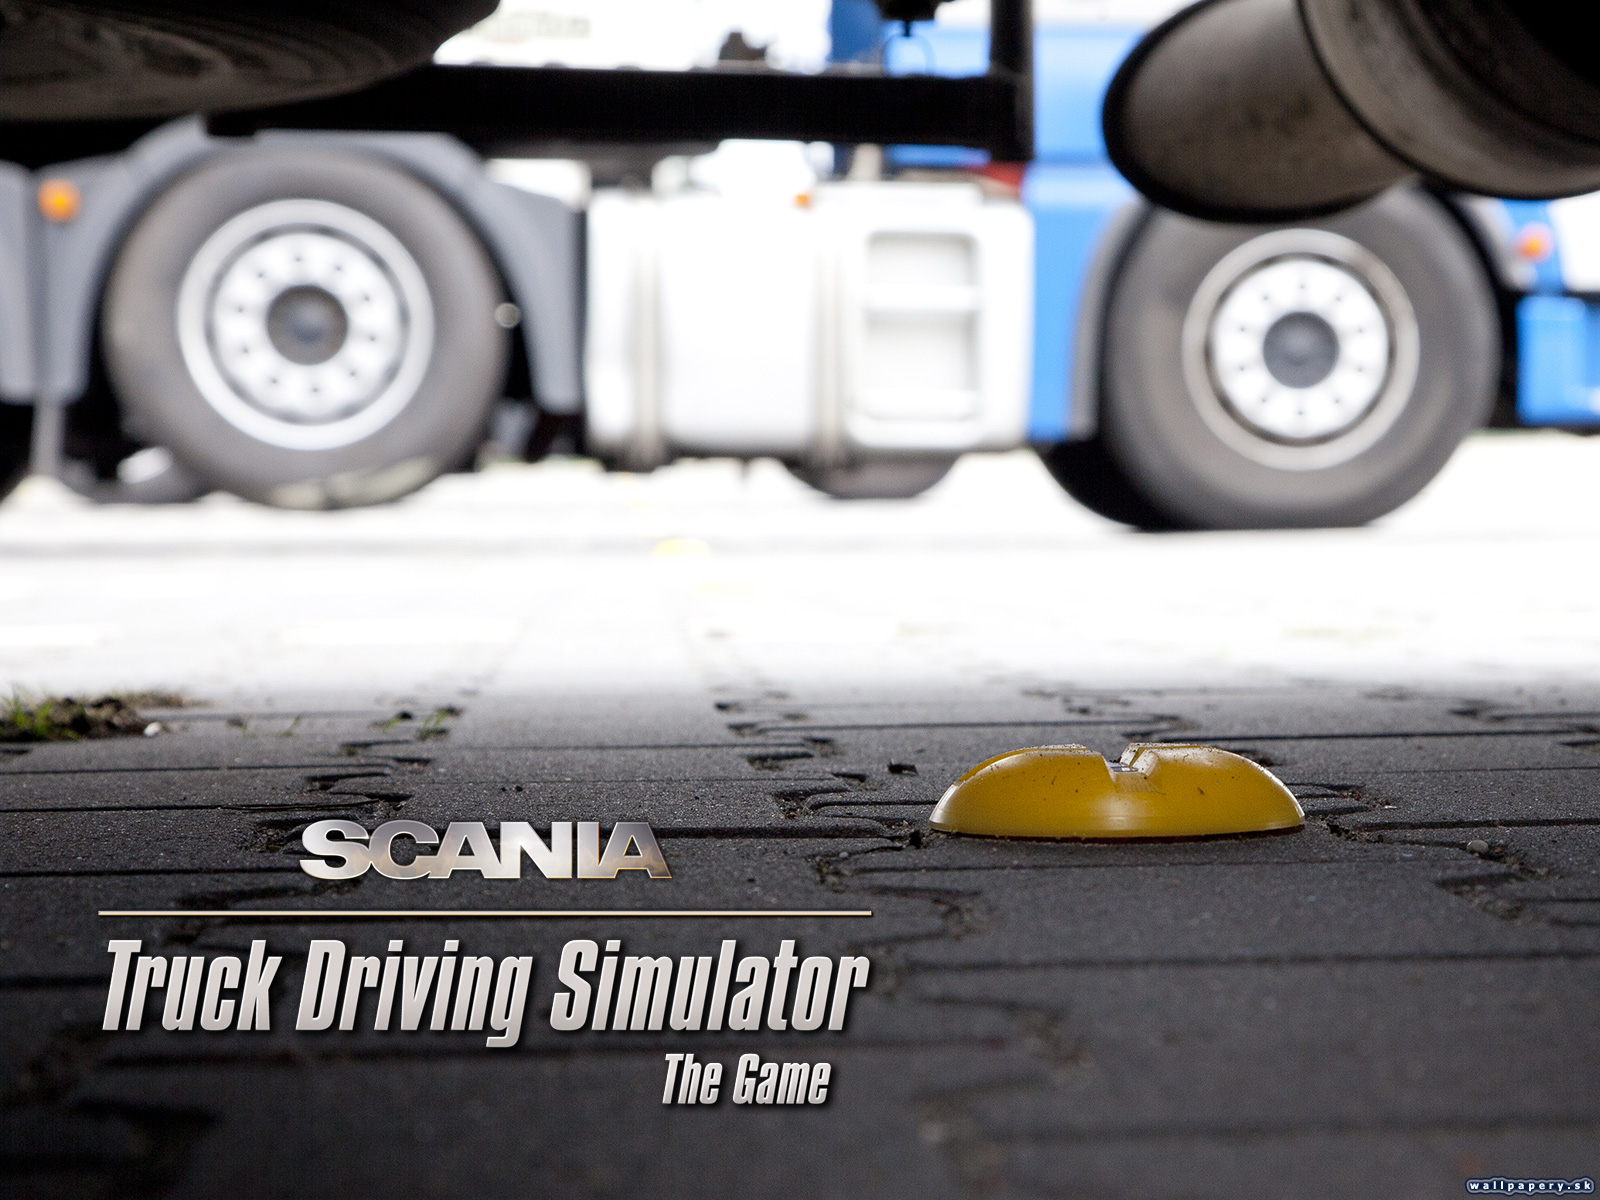 Scania Truck Driving Simulator - The Game - wallpaper 6